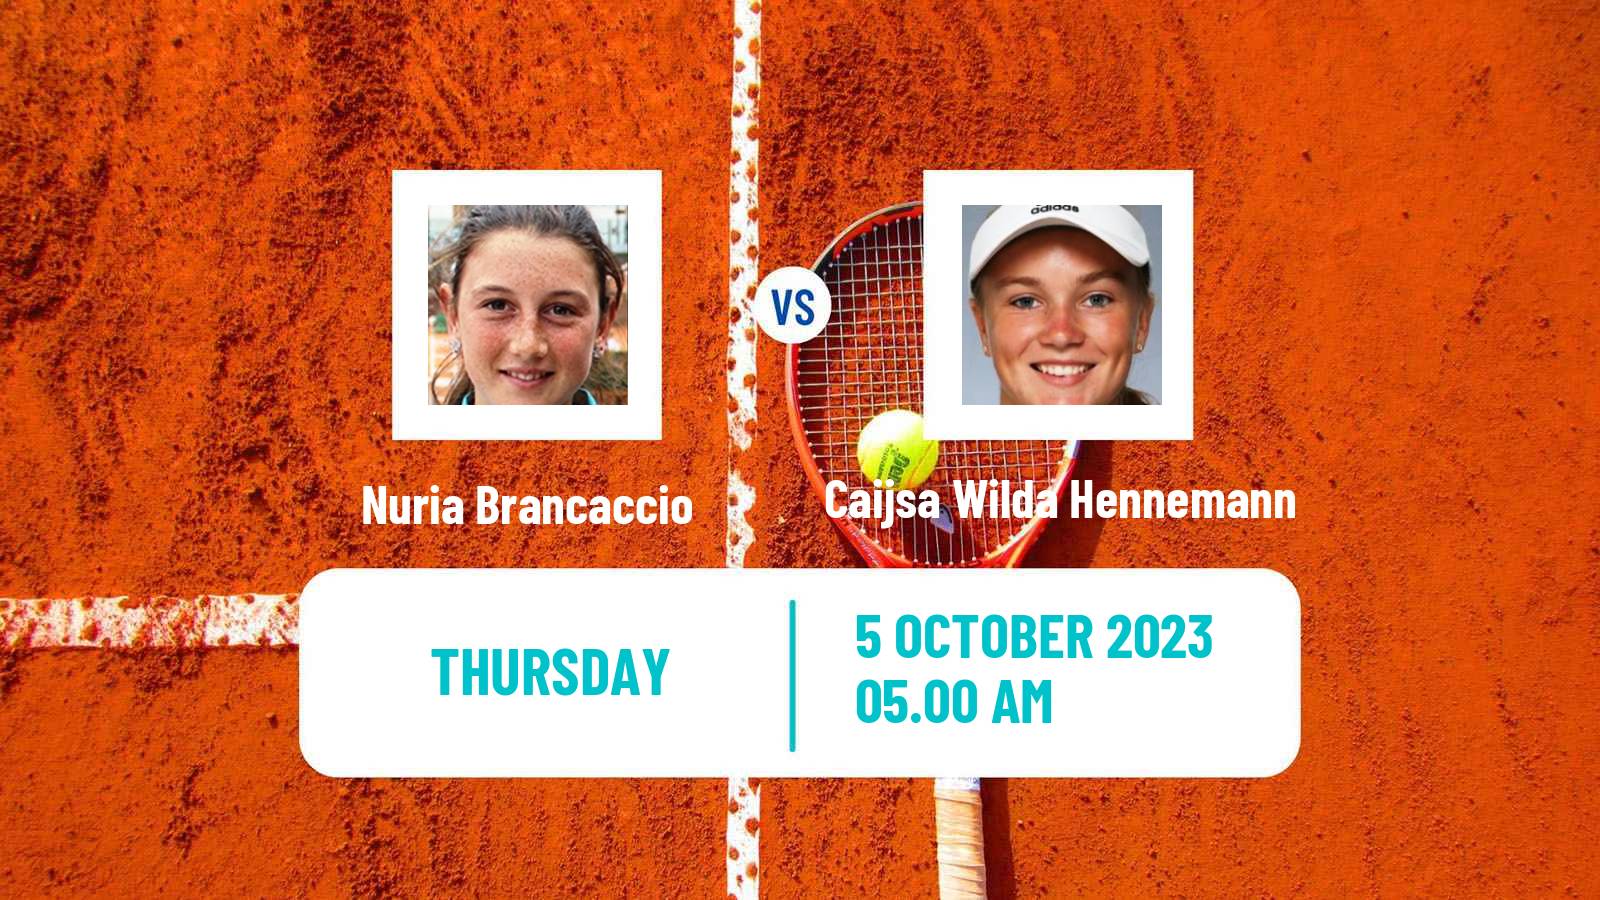 Tennis ITF W25 Santa Margherita Di Pula 8 Women Nuria Brancaccio - Caijsa Wilda Hennemann